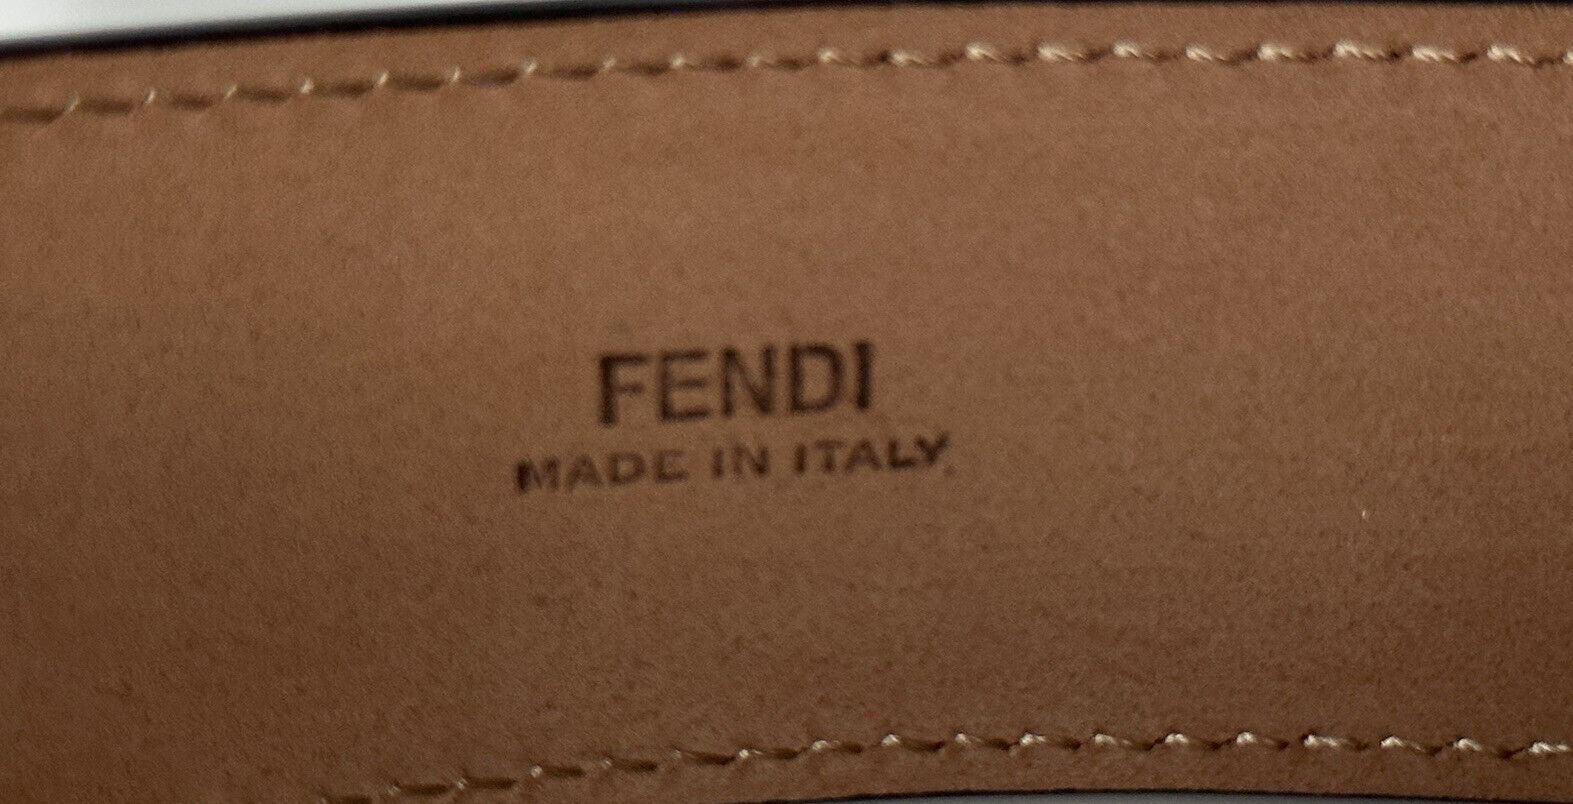 NWT $490 Fendi FF Calf Leather Black Belt 95/38 Italy 7C0469